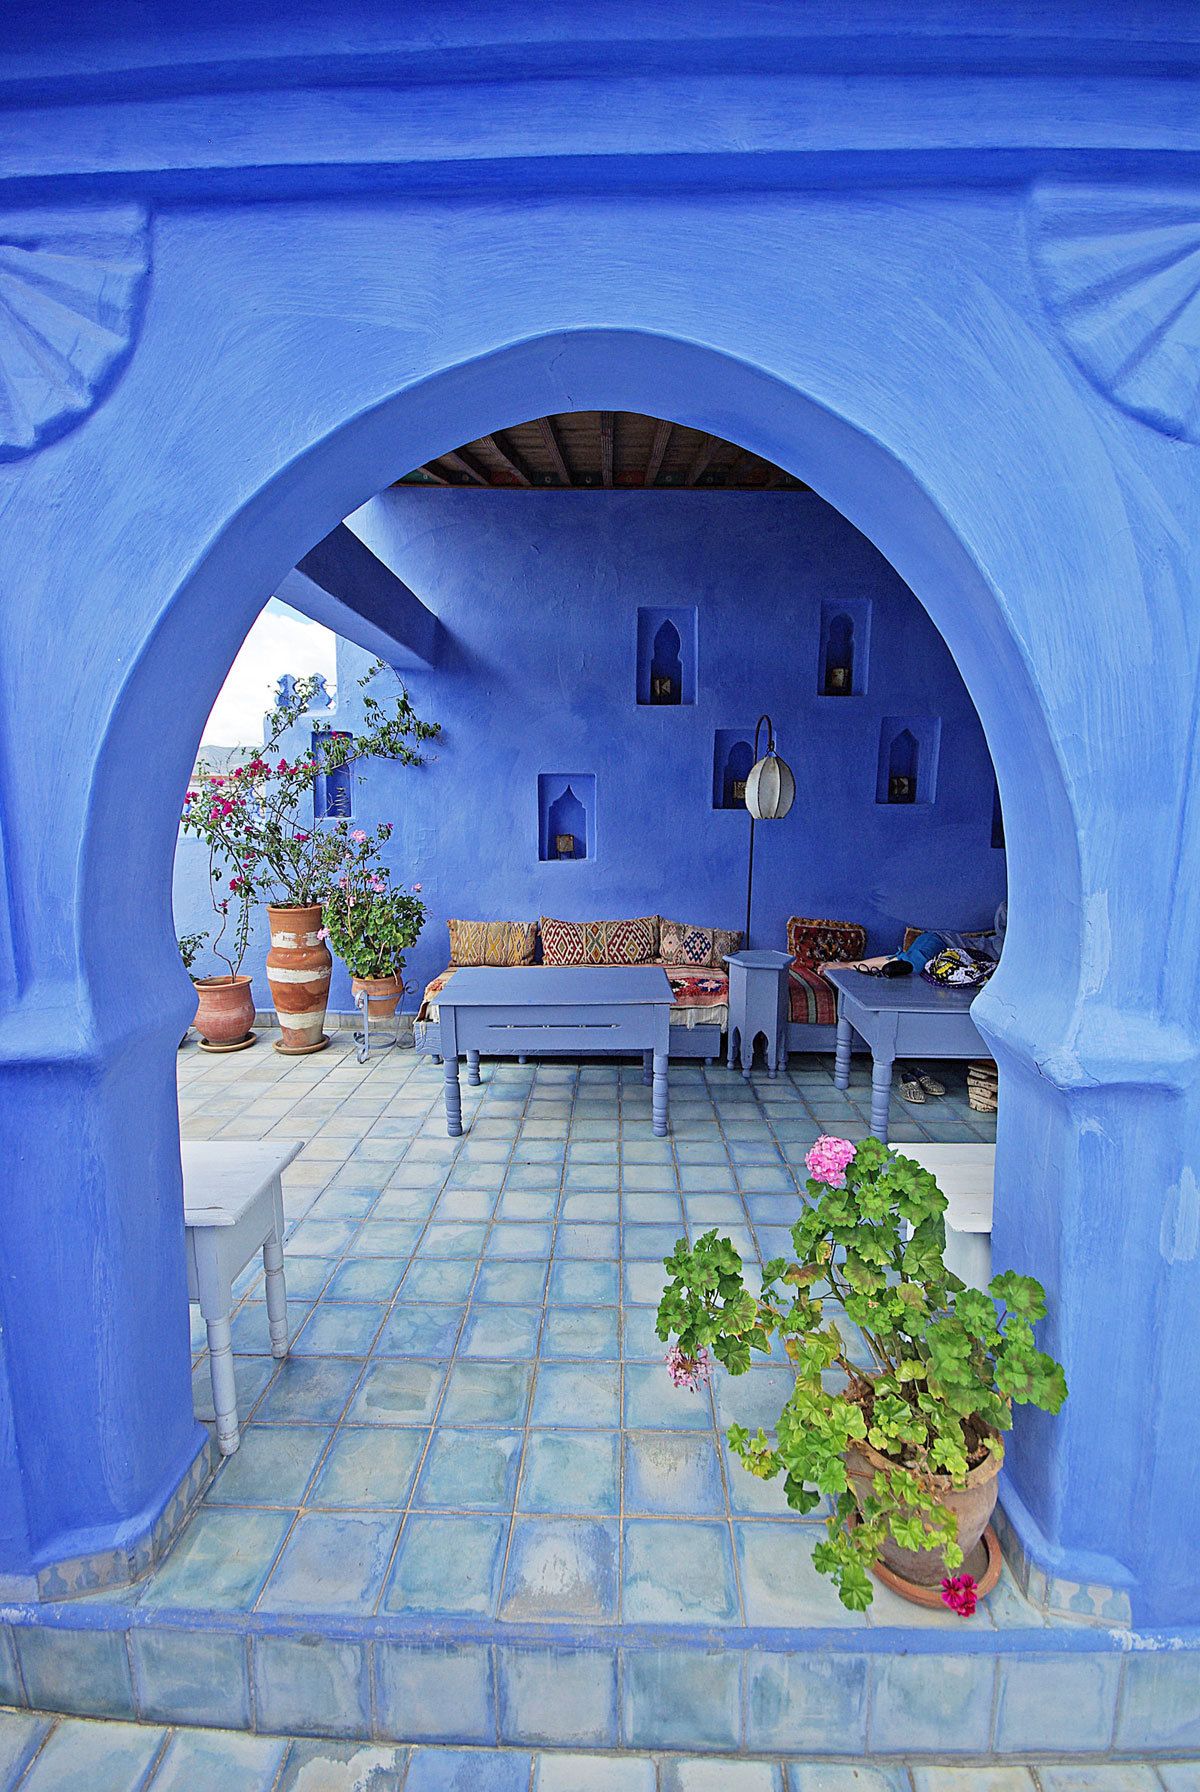 terrasse marocaine